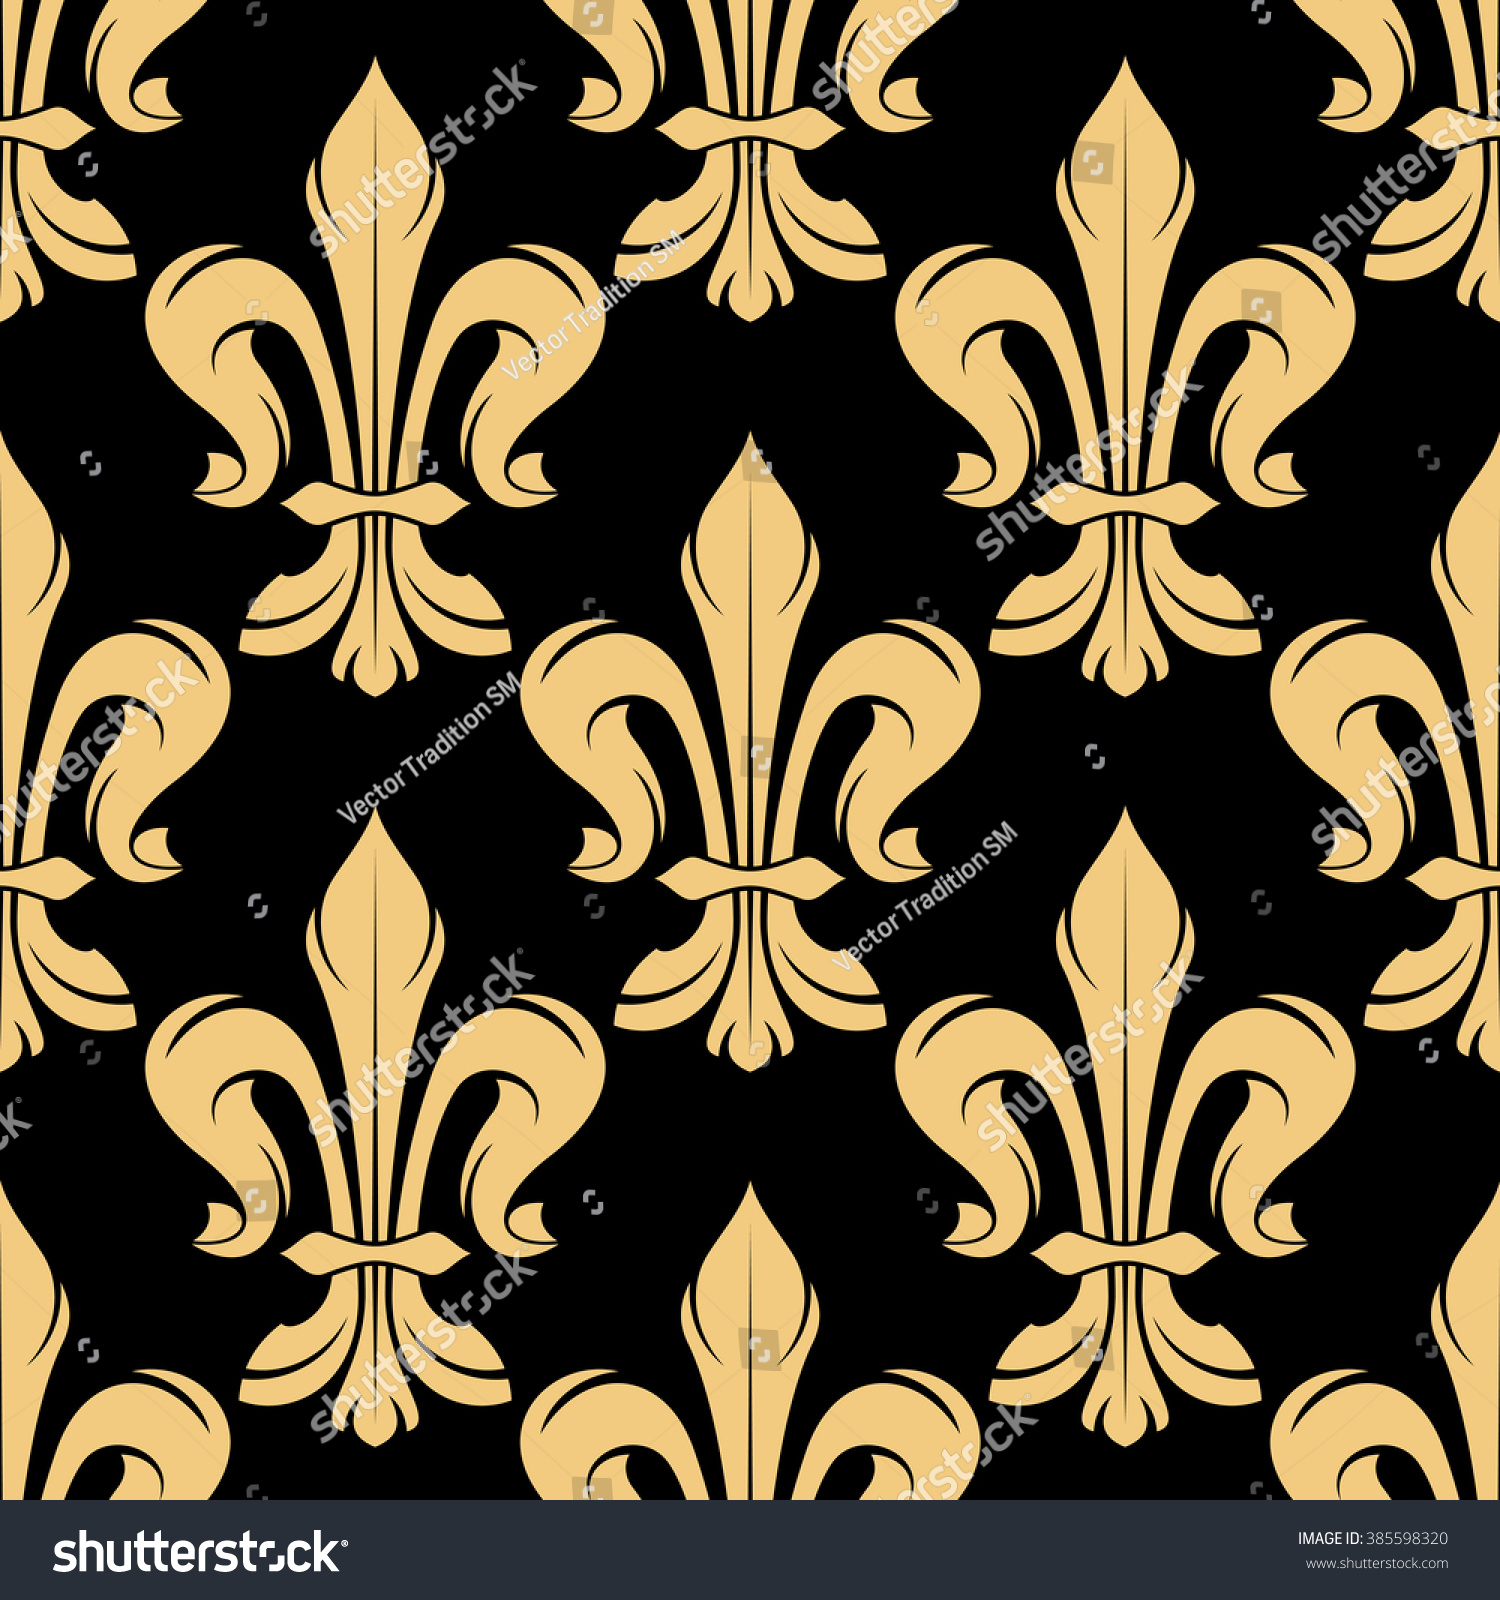 Black And Golden Seamless Fleur-De-Lis Pattern Of Royal Heraldic Lily ...